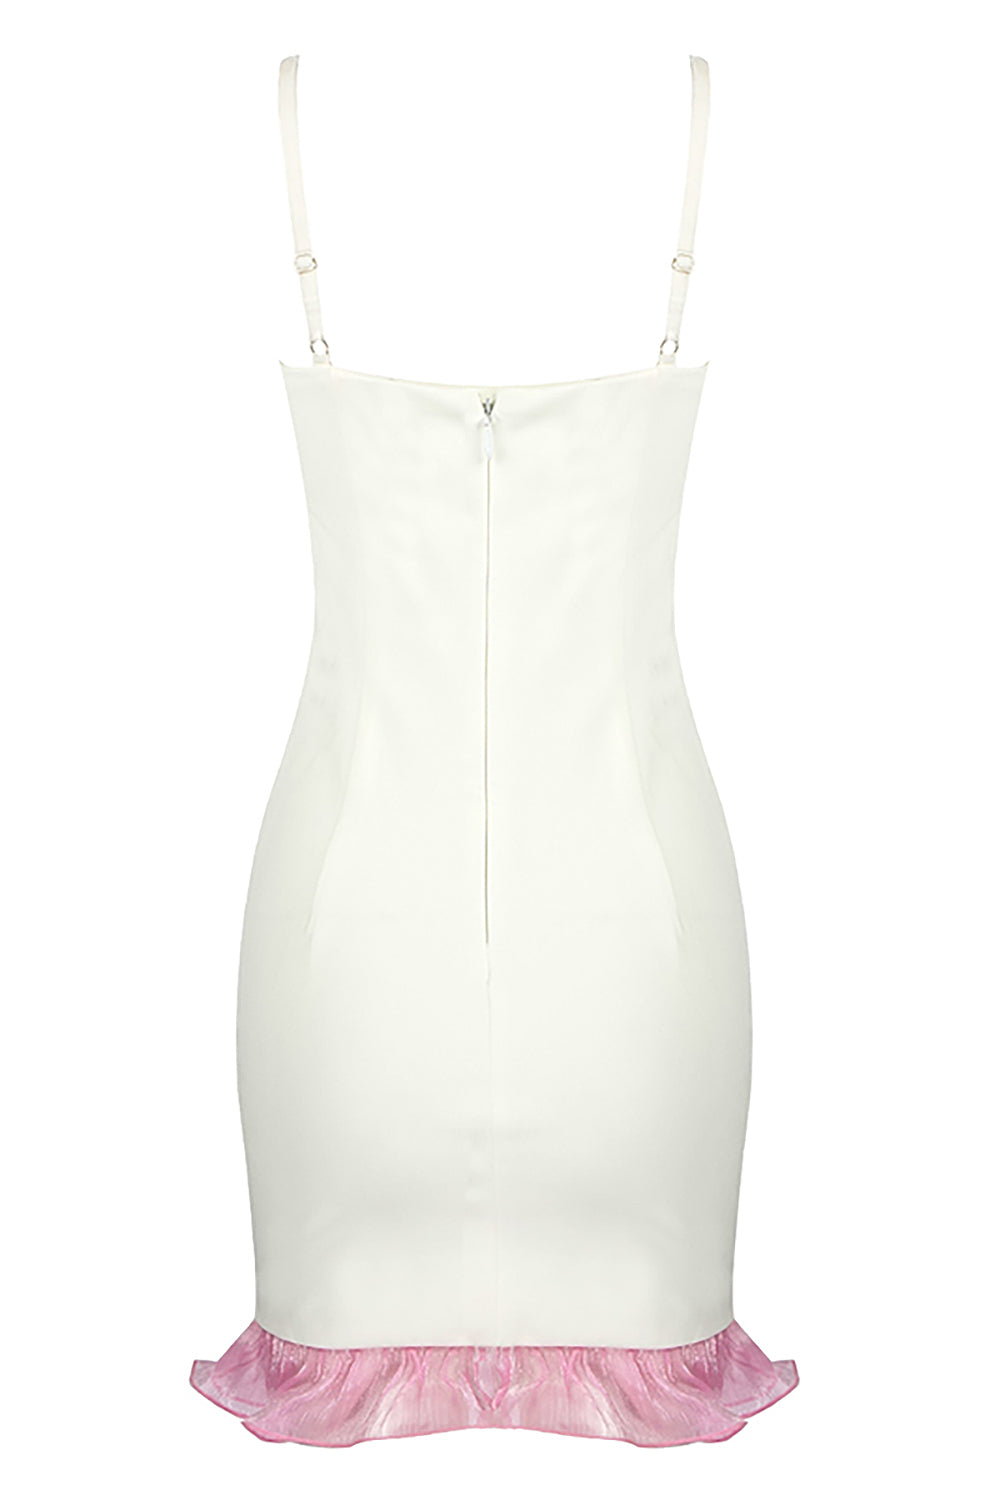 Mini vestido branco com tiras de cristal Clam-Shell Bralets